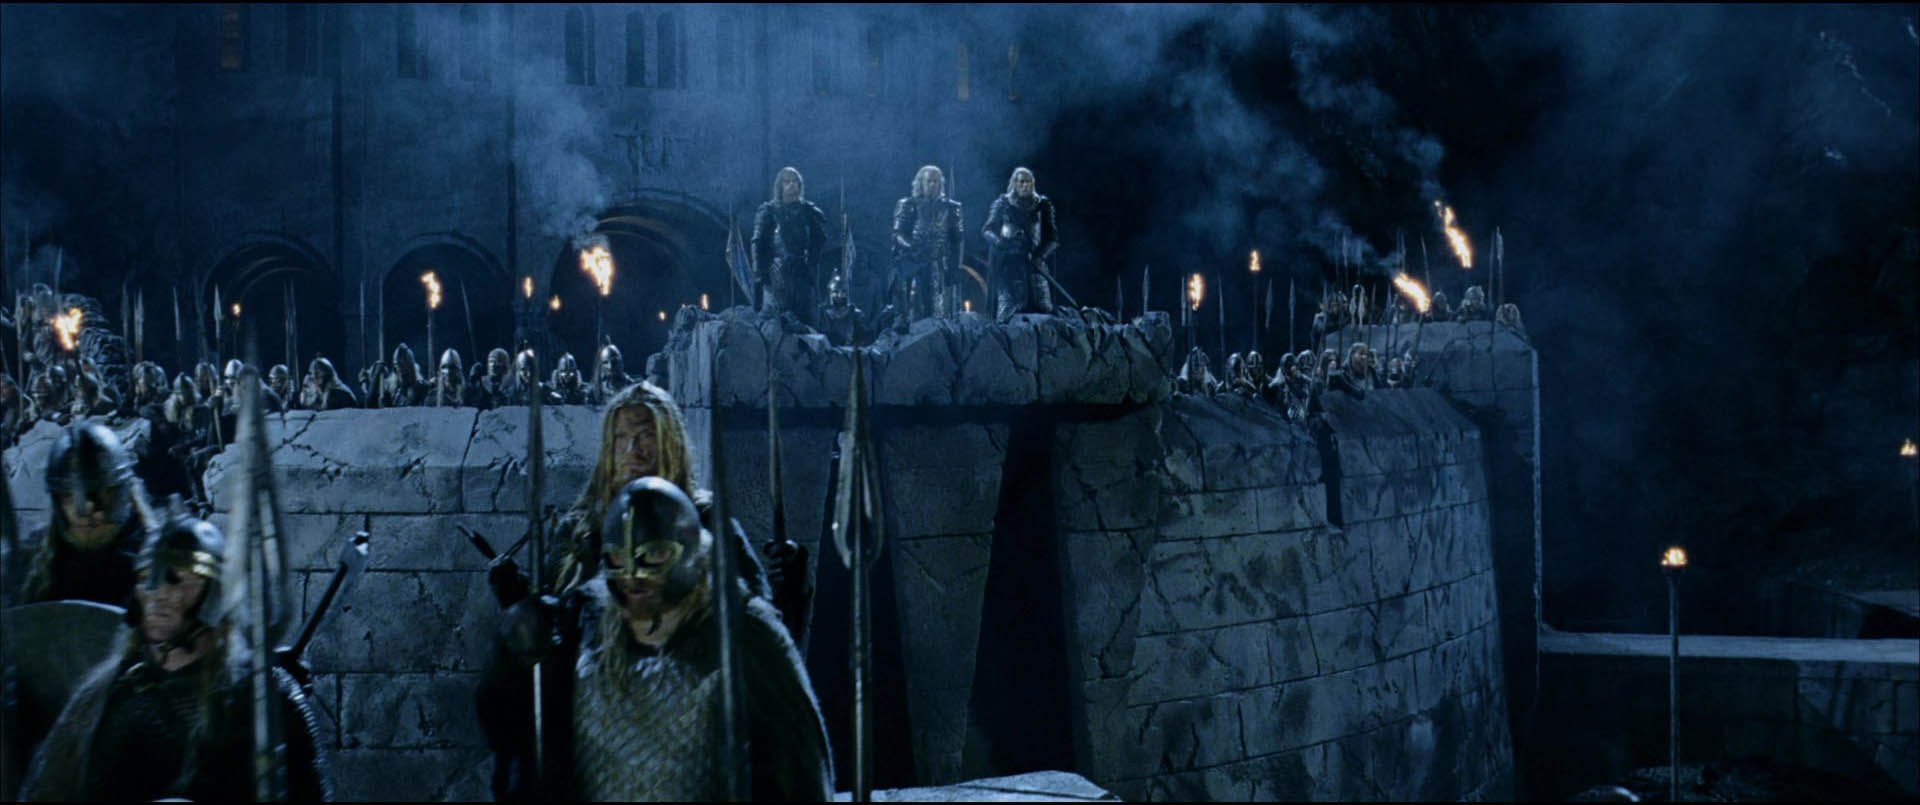 Властелин колец: Две сорванные башни / The Lord of the Rings: The Two Towers / 2002 / АП (Пучков) / HEVC / BDRip (1080p)